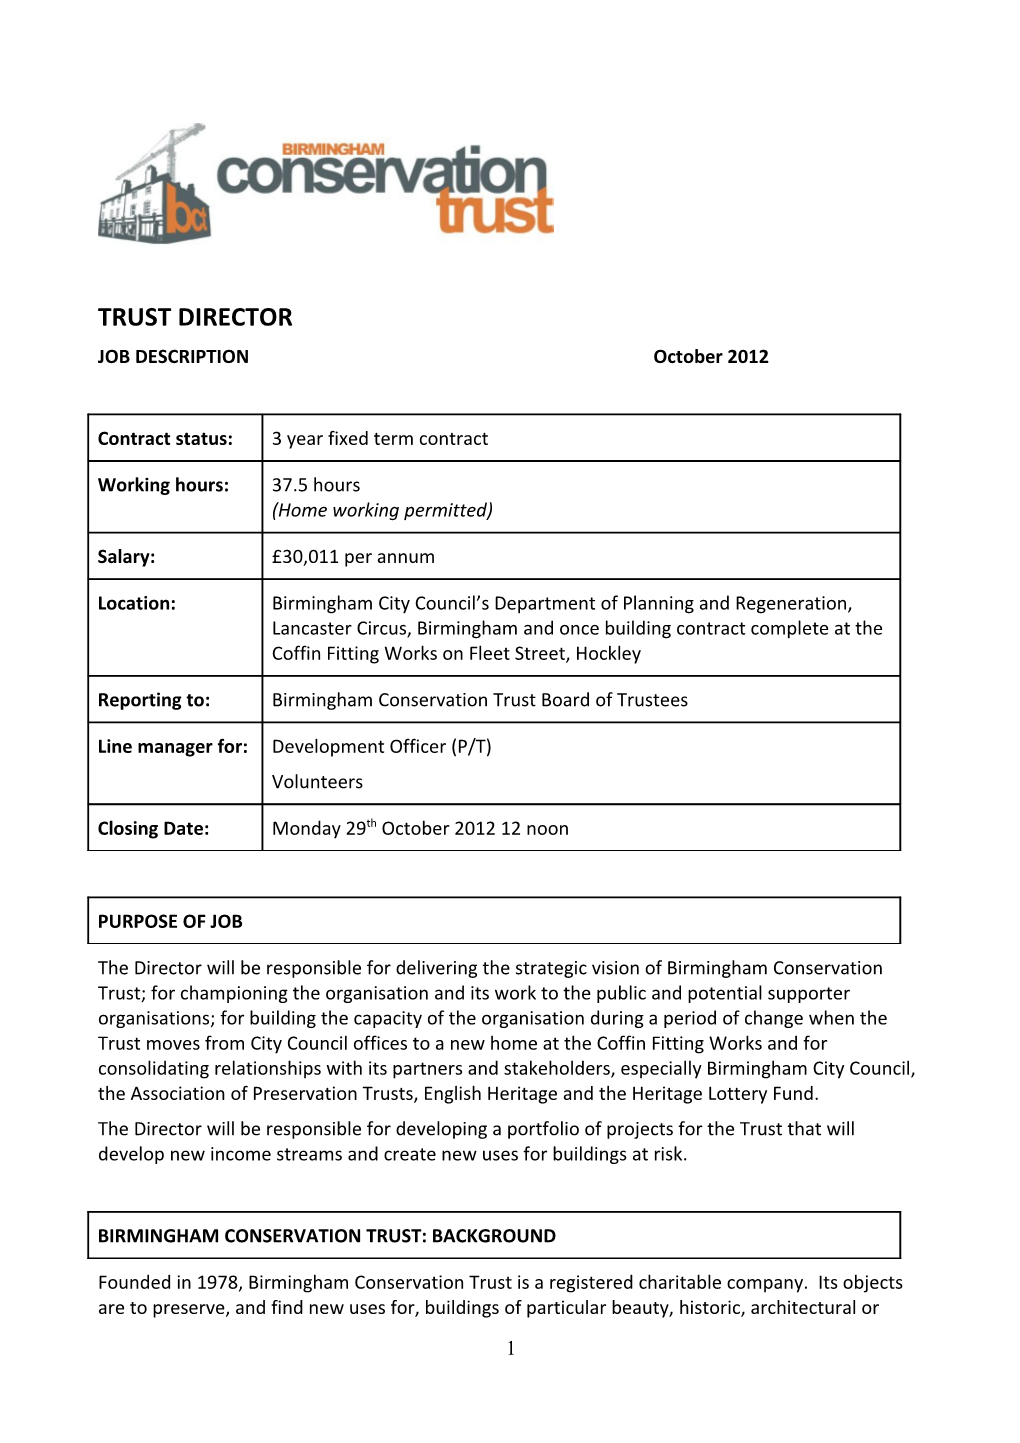 Birmingham Conservation Trust Job Description